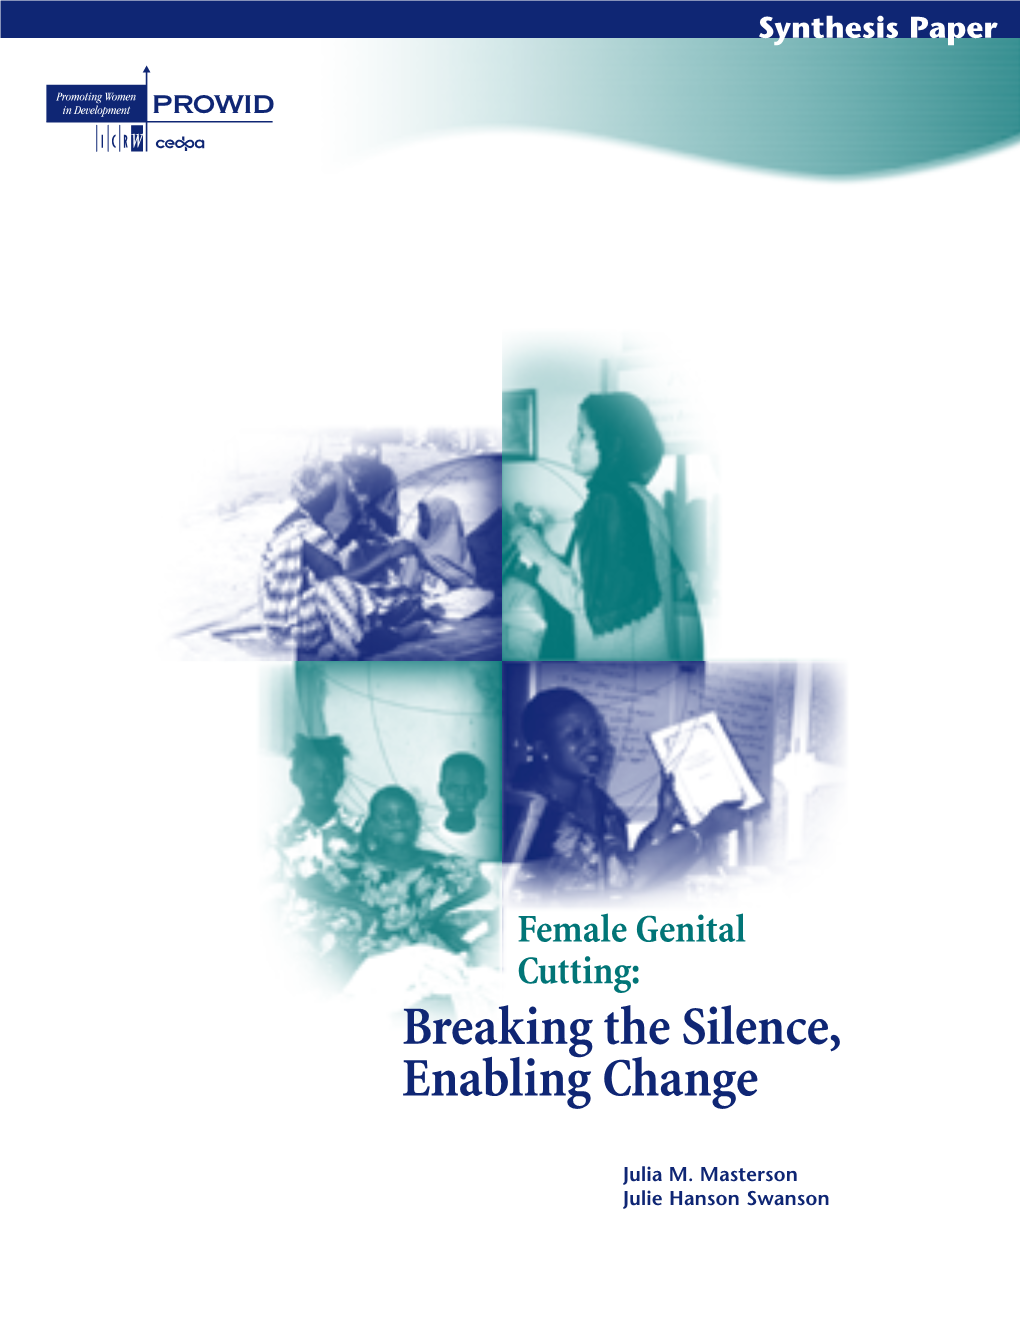 Female Genital Cutting: Breaking the Silence, Enabling Change